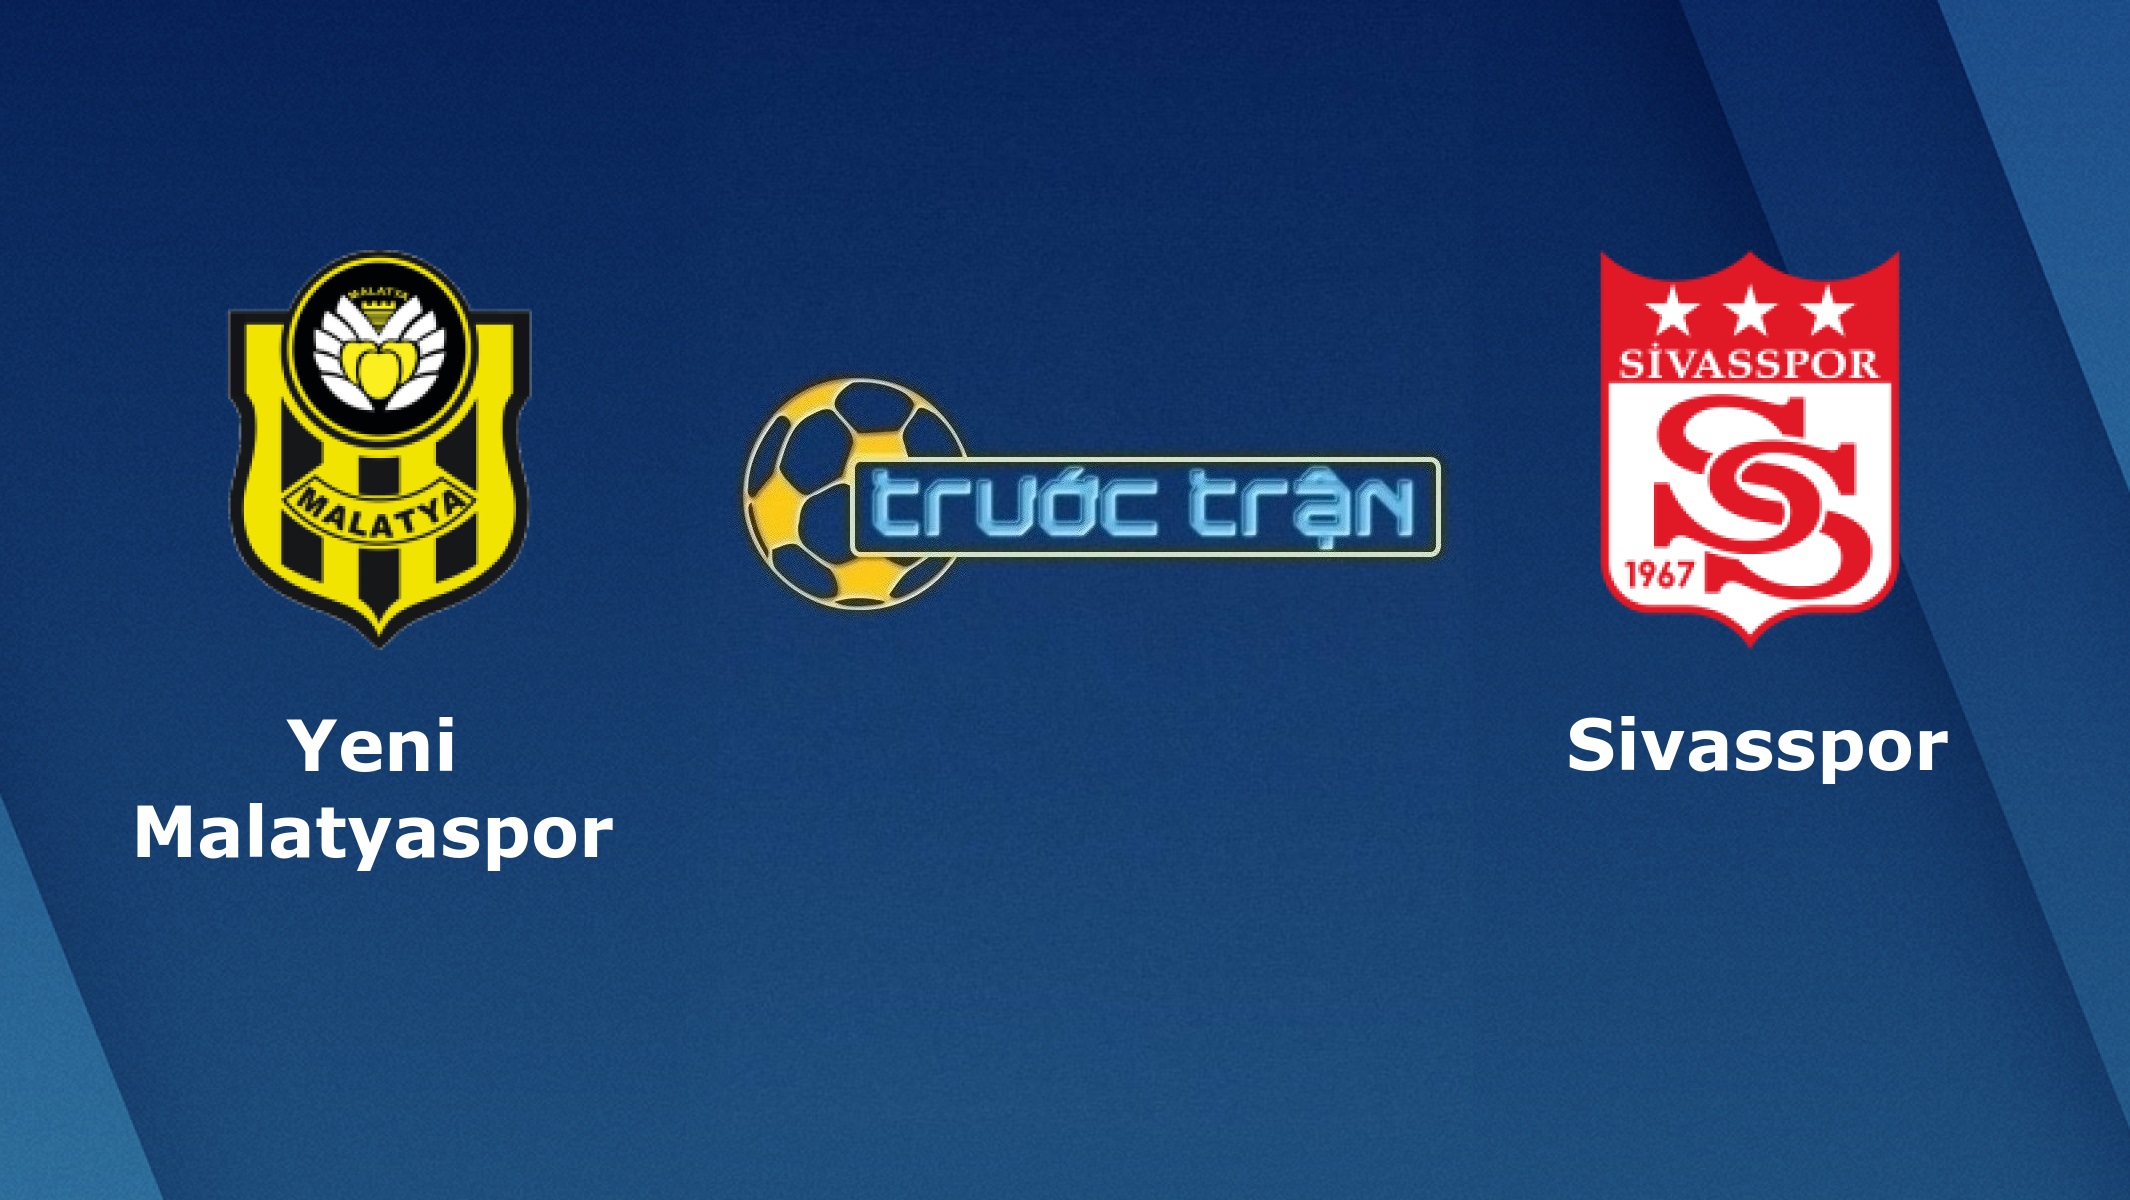 Yeni Malatyaspor vs Sivasspor – Tip kèo bóng đá hôm nay – 20h00 05/01/2021